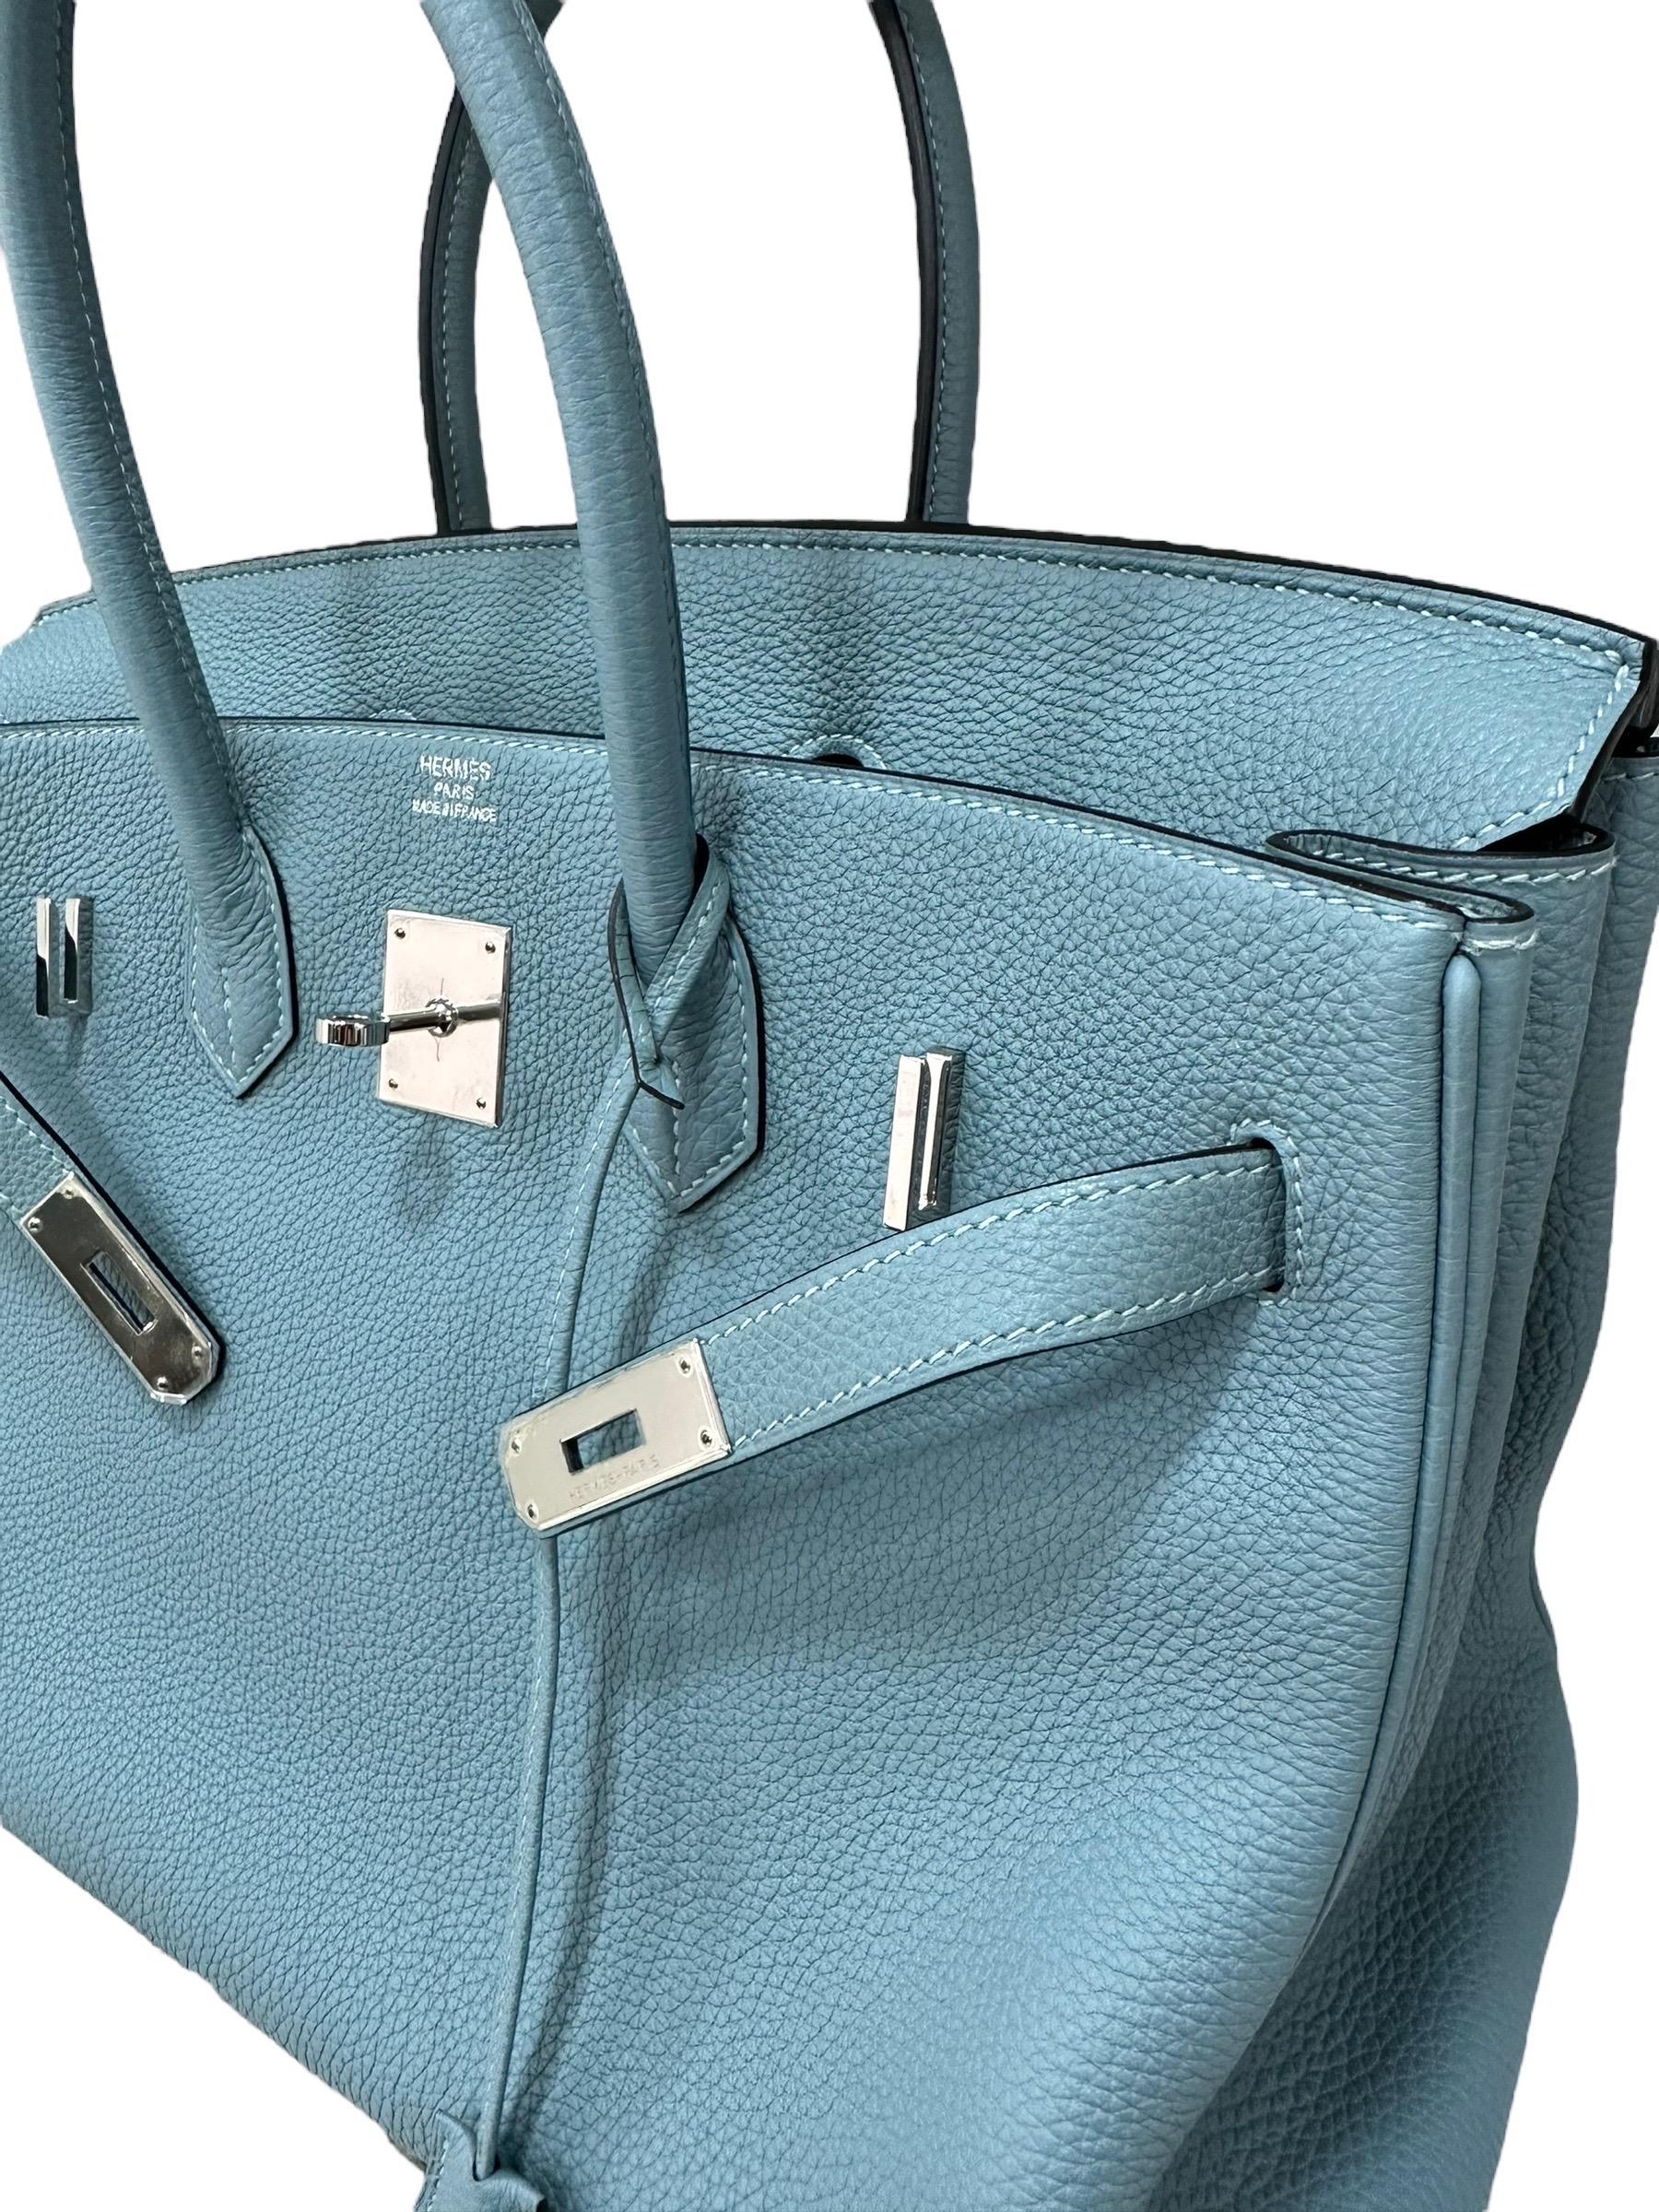 Bleu 2009 Hermès Birkin 35 Togo Leather Ciel Top Handle Bag en vente